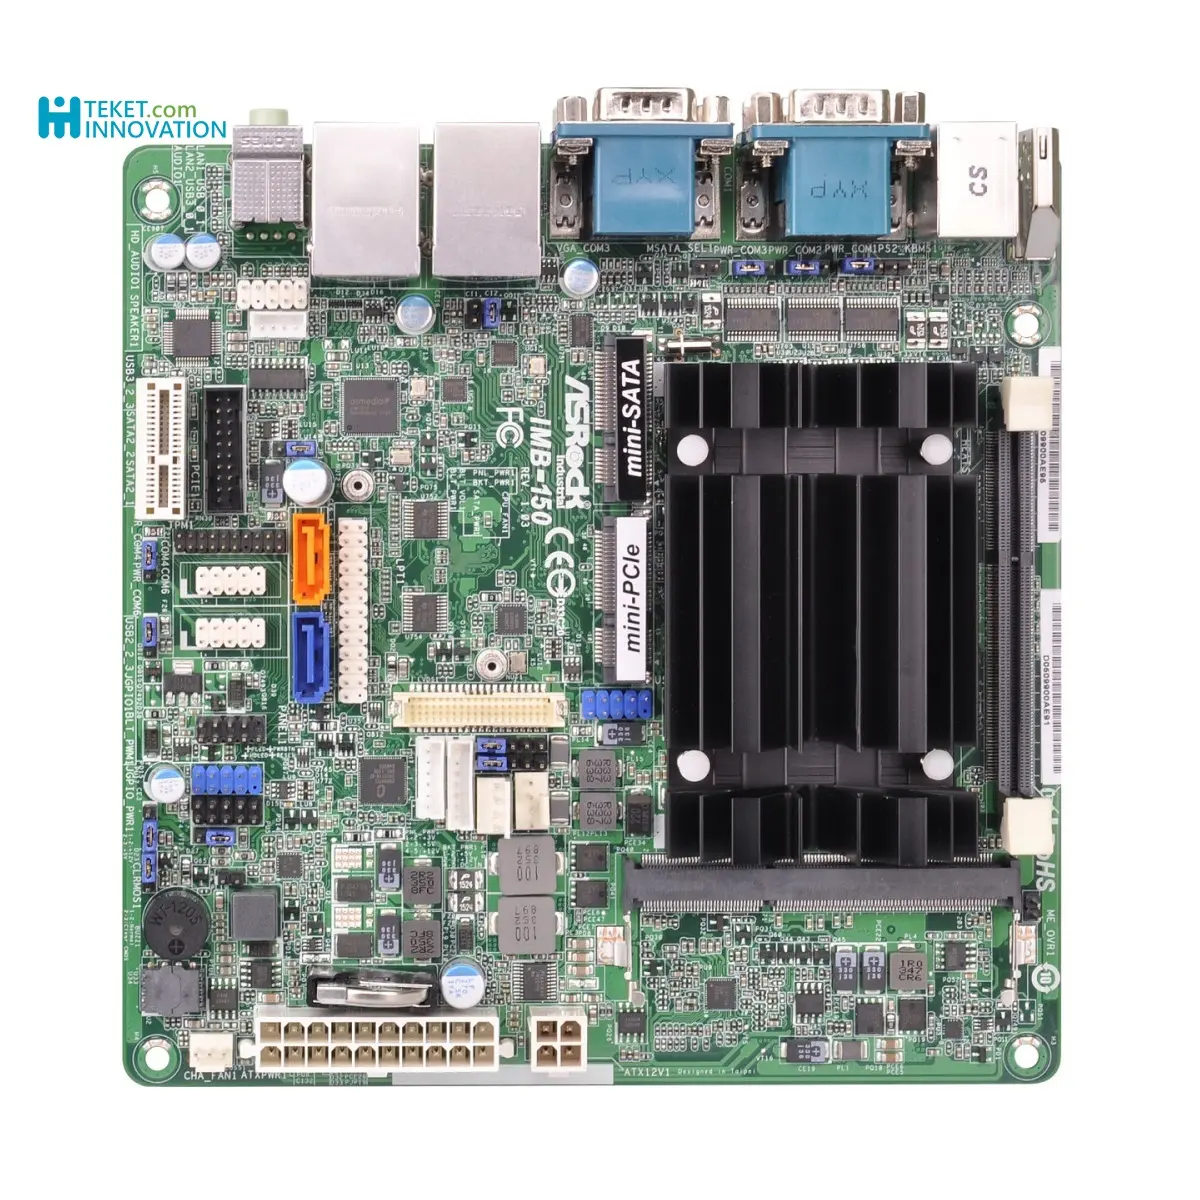 Asrock MINI-ITX motherboard IMB-150 IMB-150D with Intel Celeron J1900 N2930 N2920, 5 COM,and Intel HD Graphics